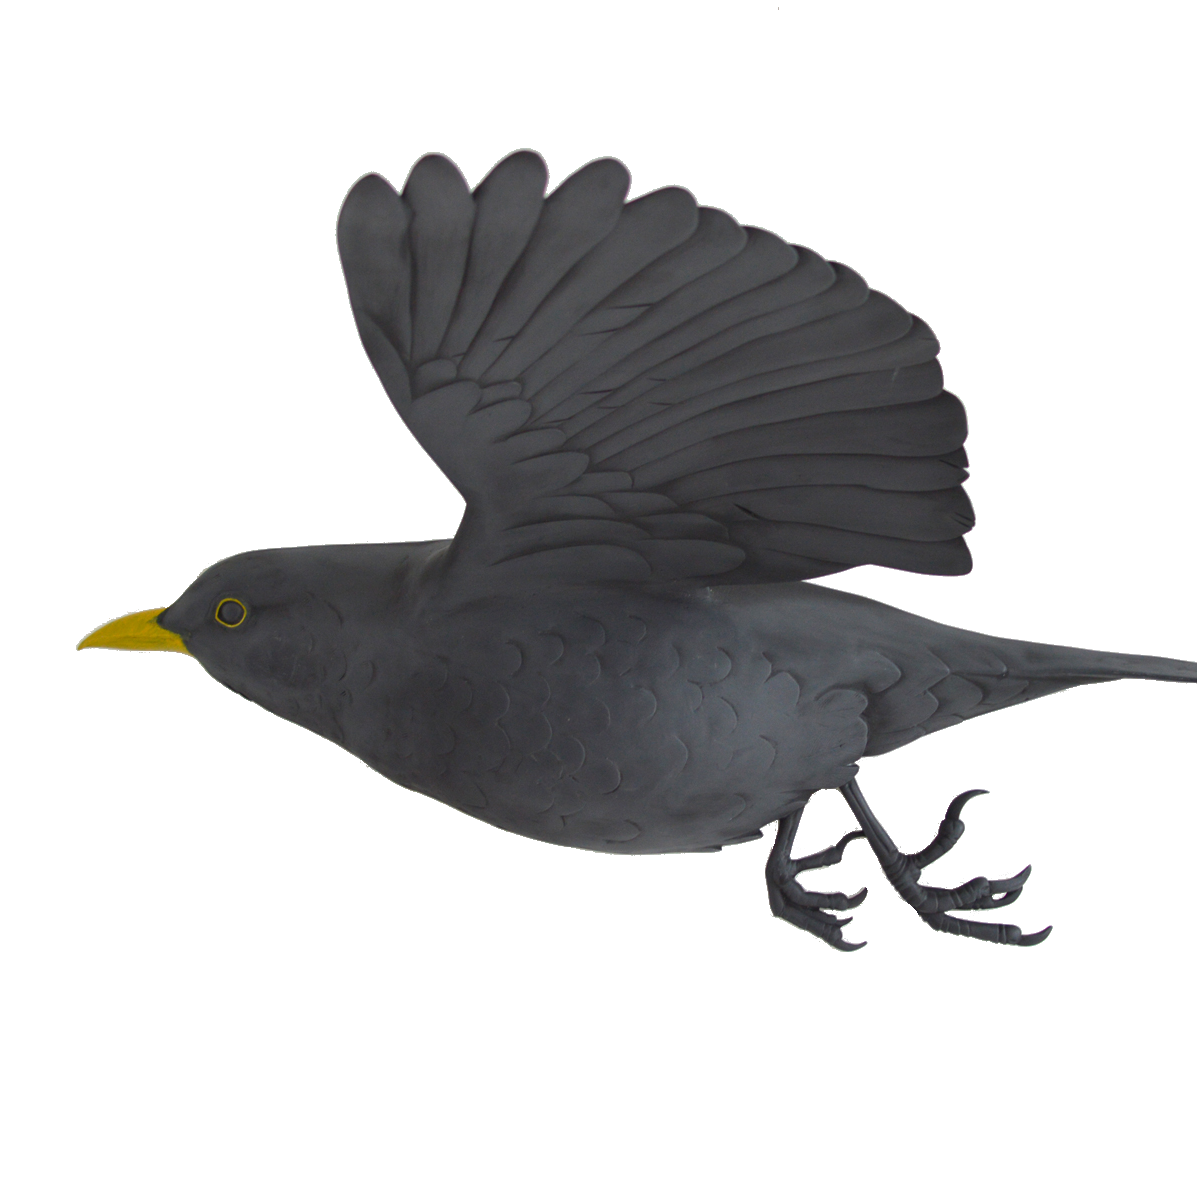 Wild Common Blackbird PNG Images